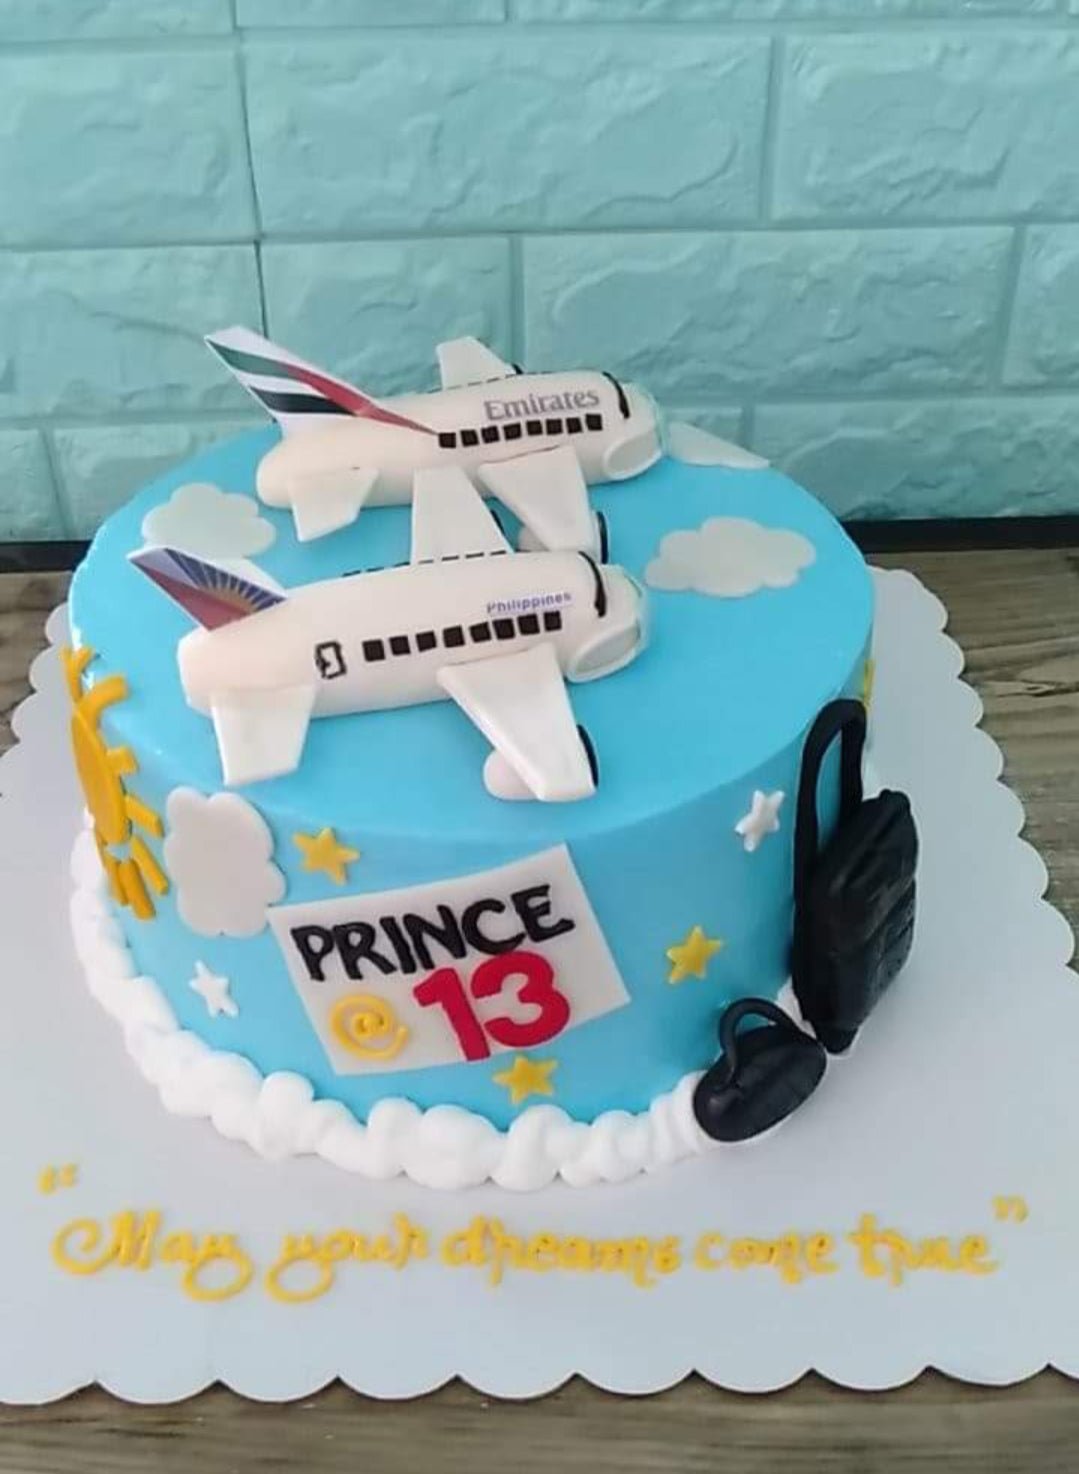 Prince Royal Cake A In Gurgaon